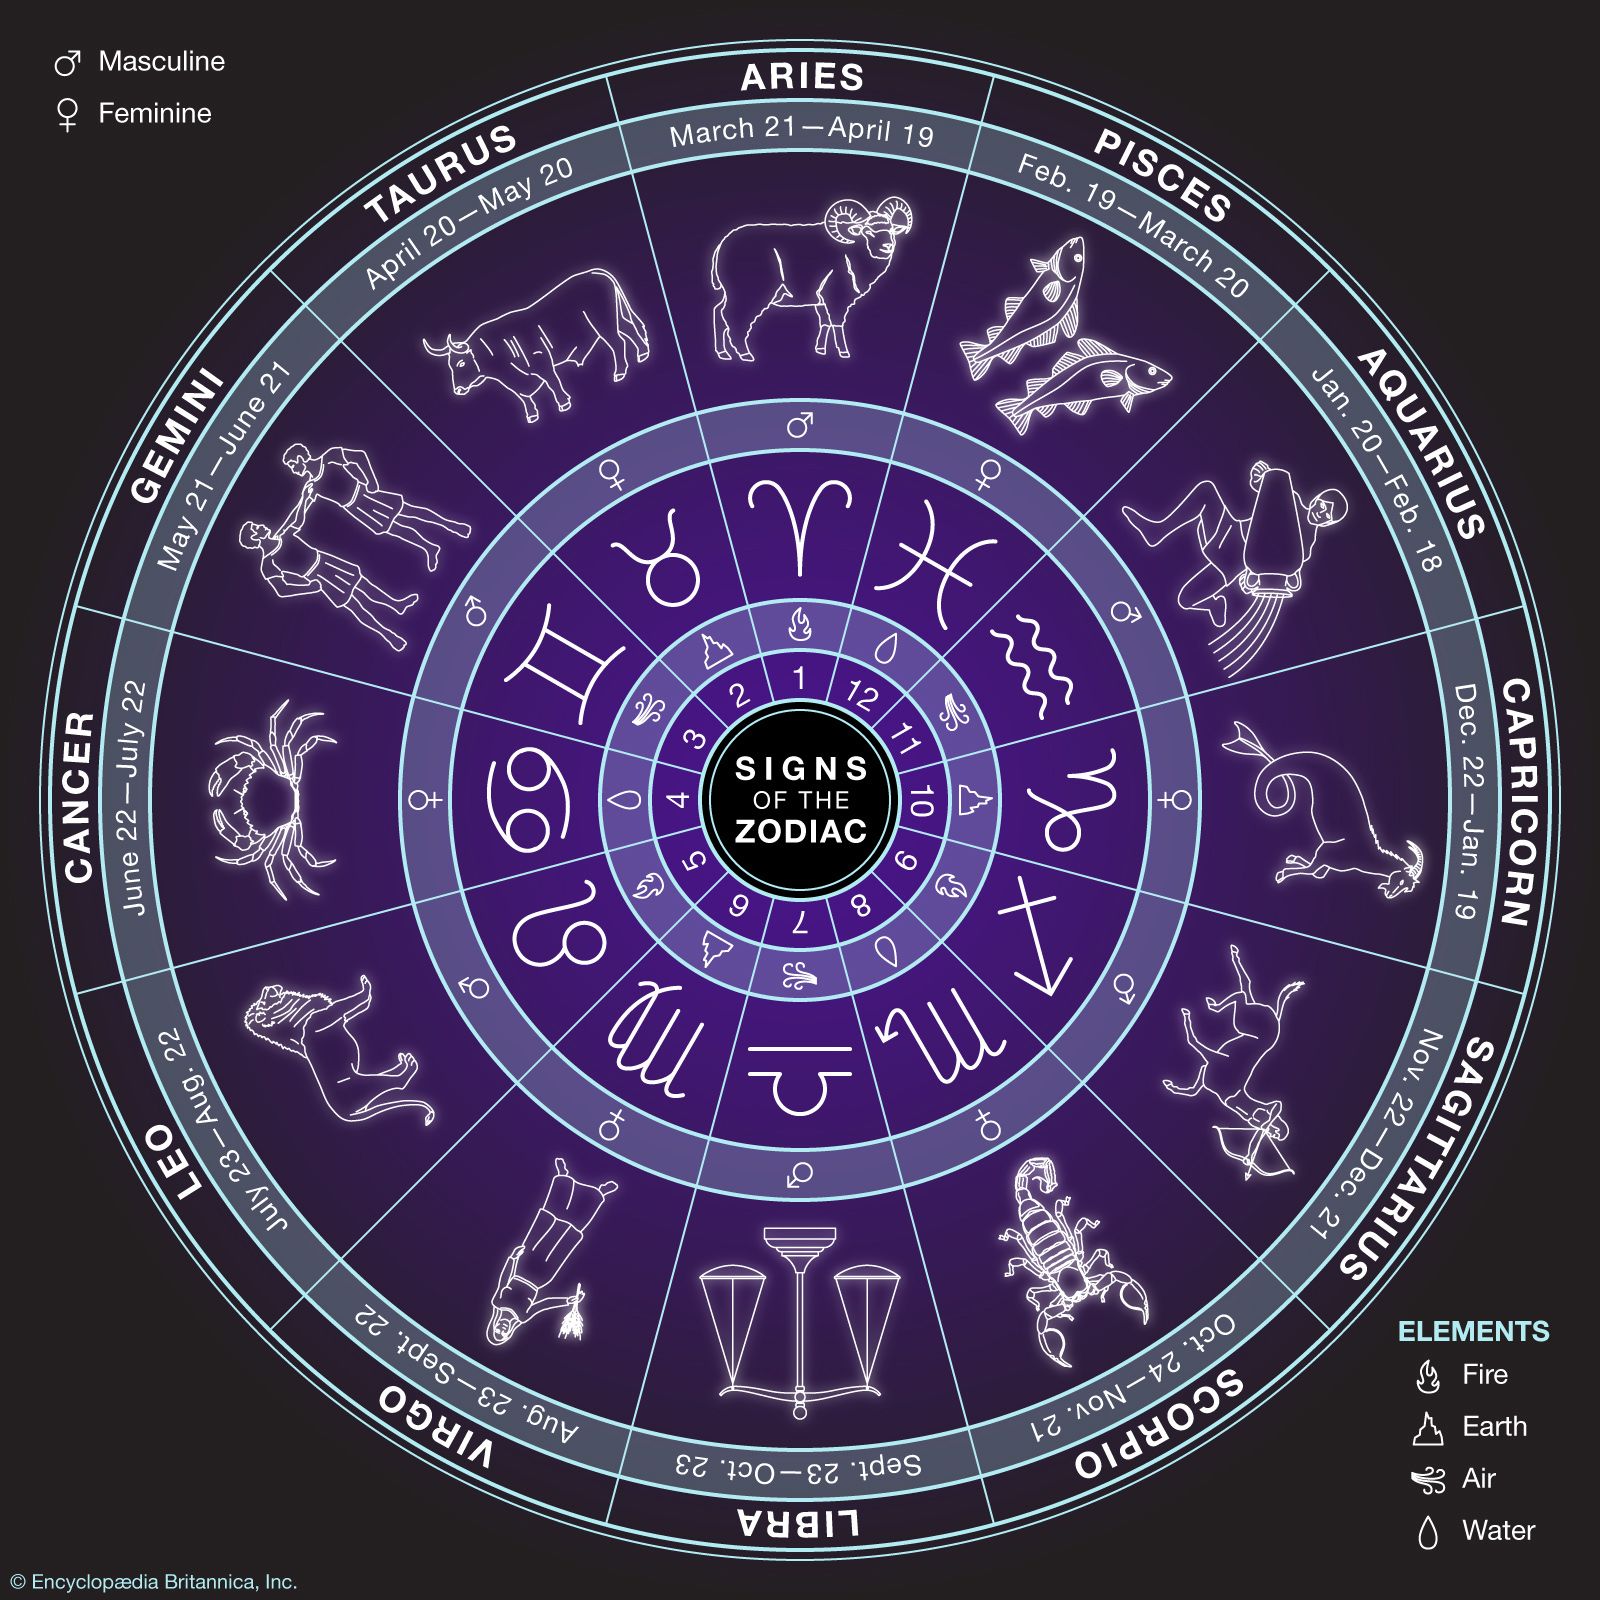 Zodiac History